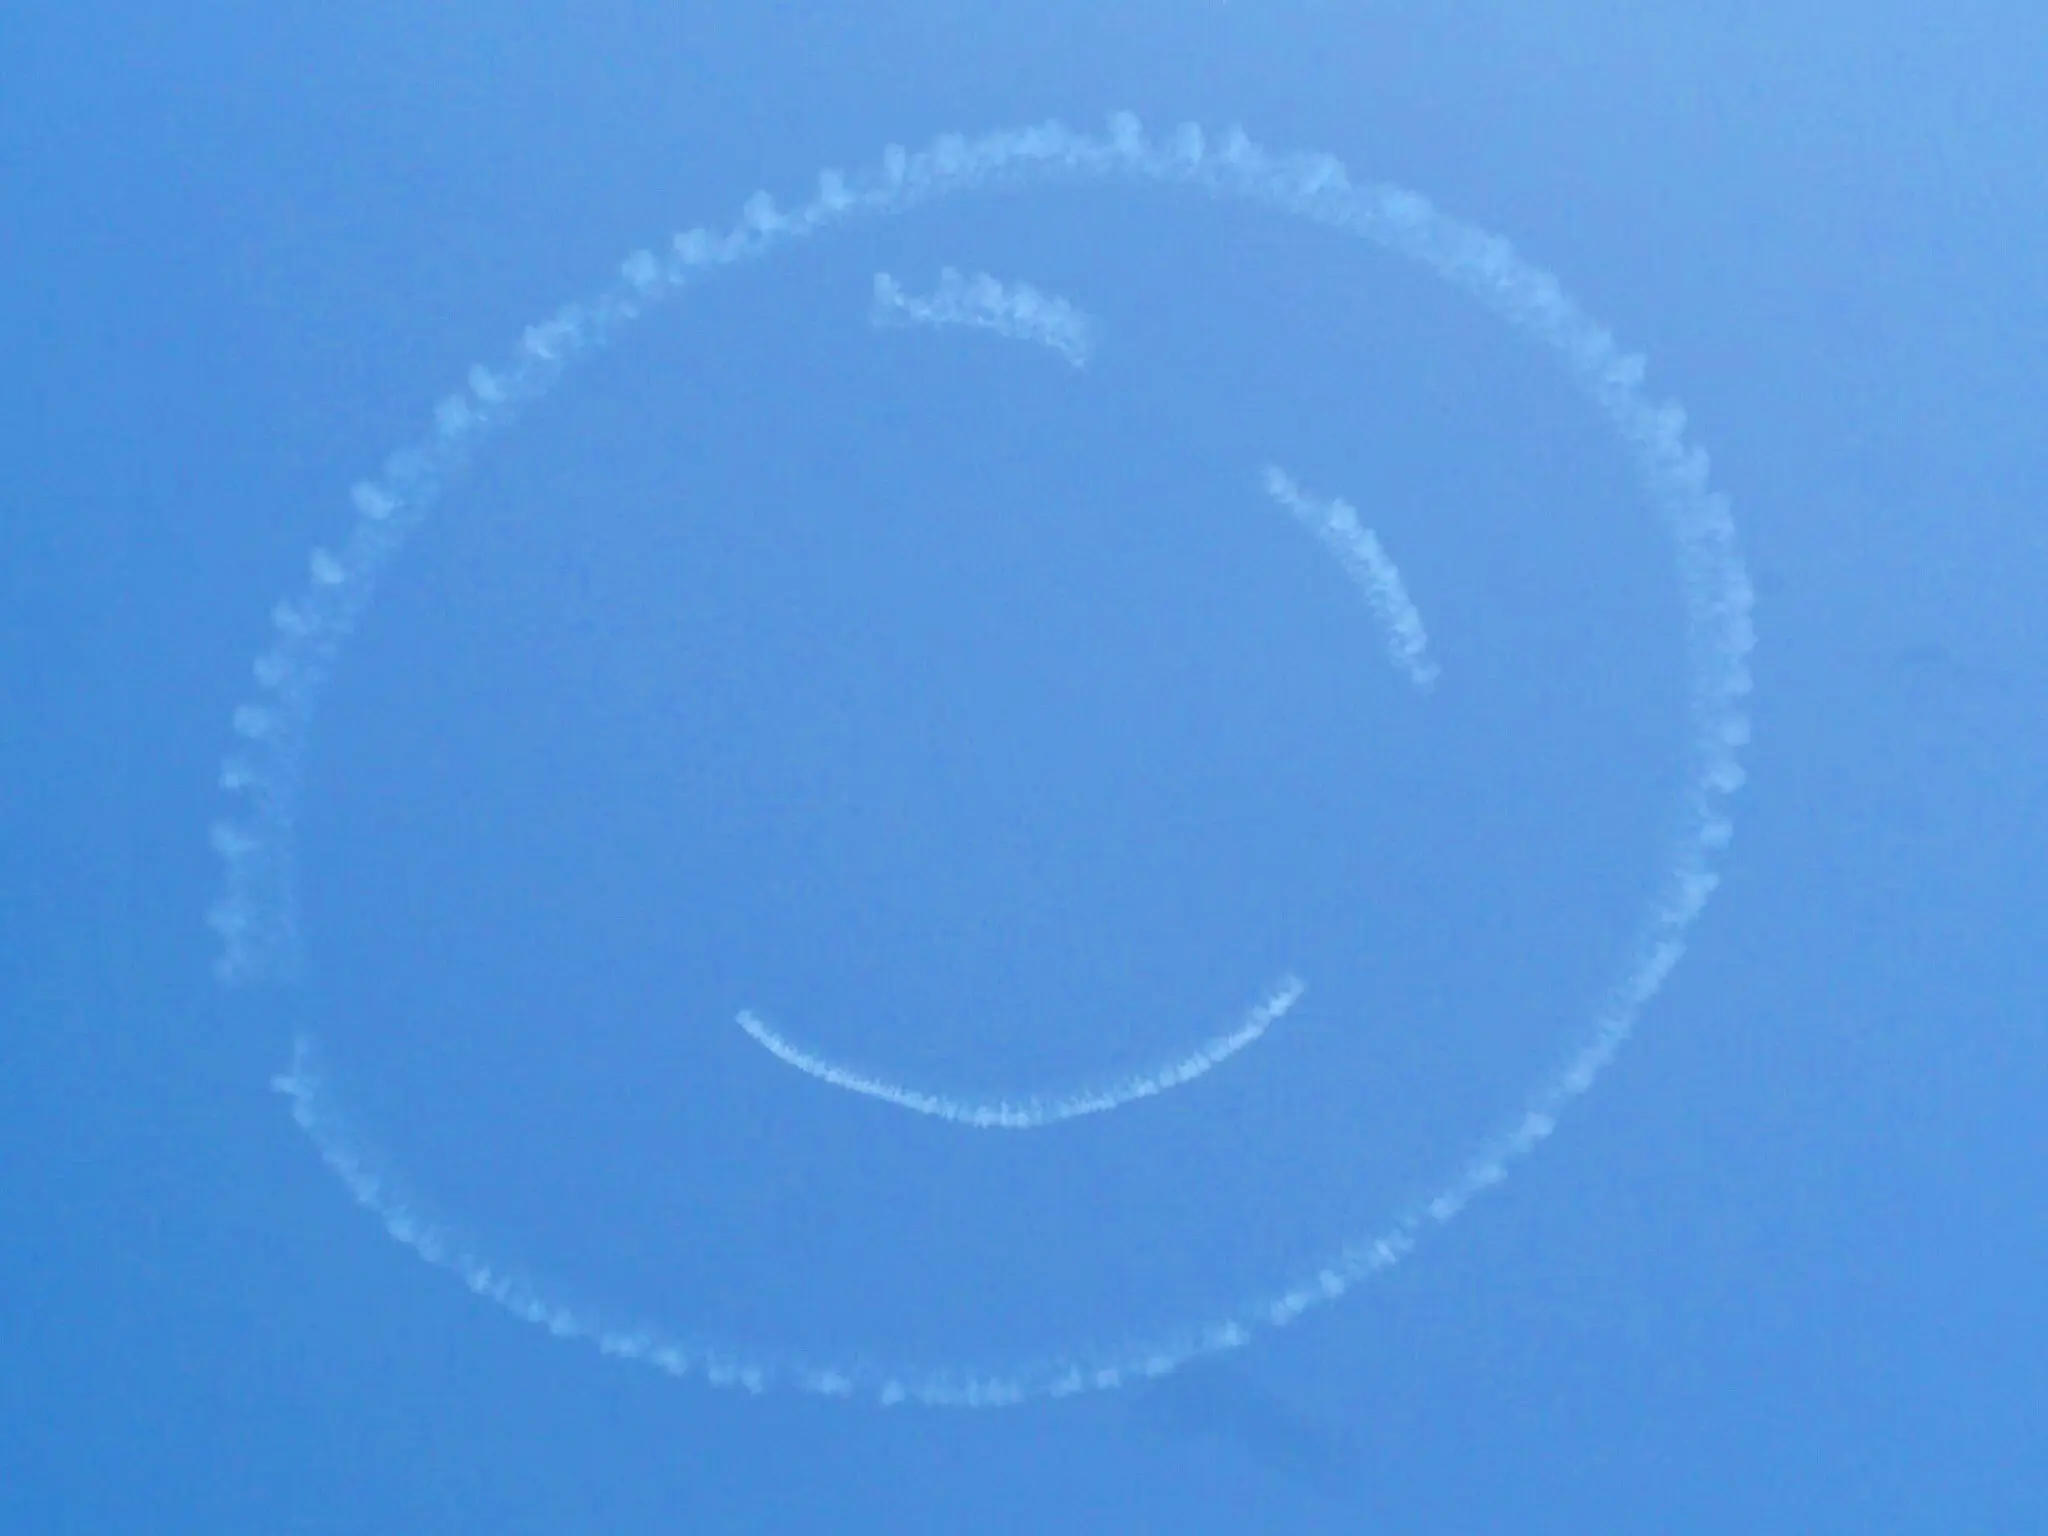 Fly For All 大空を見上げよう 東京の空にニコちゃんマークが出現 一瞬の幸せをシェア Moreインフルエンサーズブログ Daily More